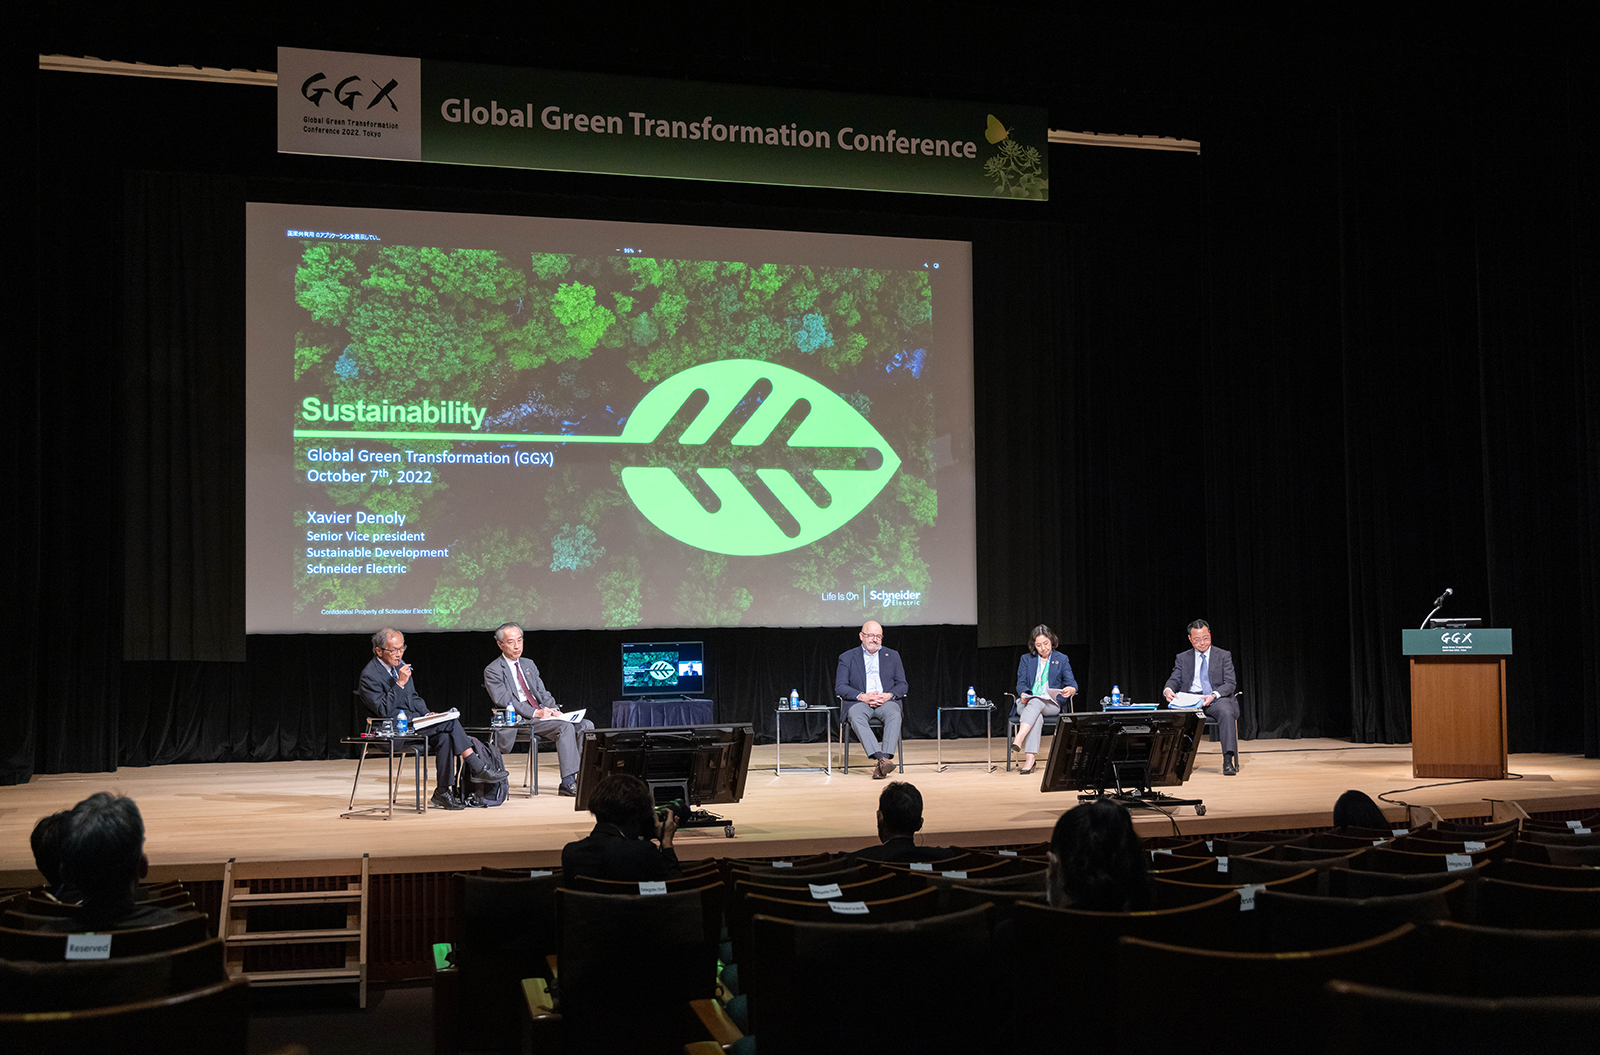 Photo: GGX 2022 panel discussion